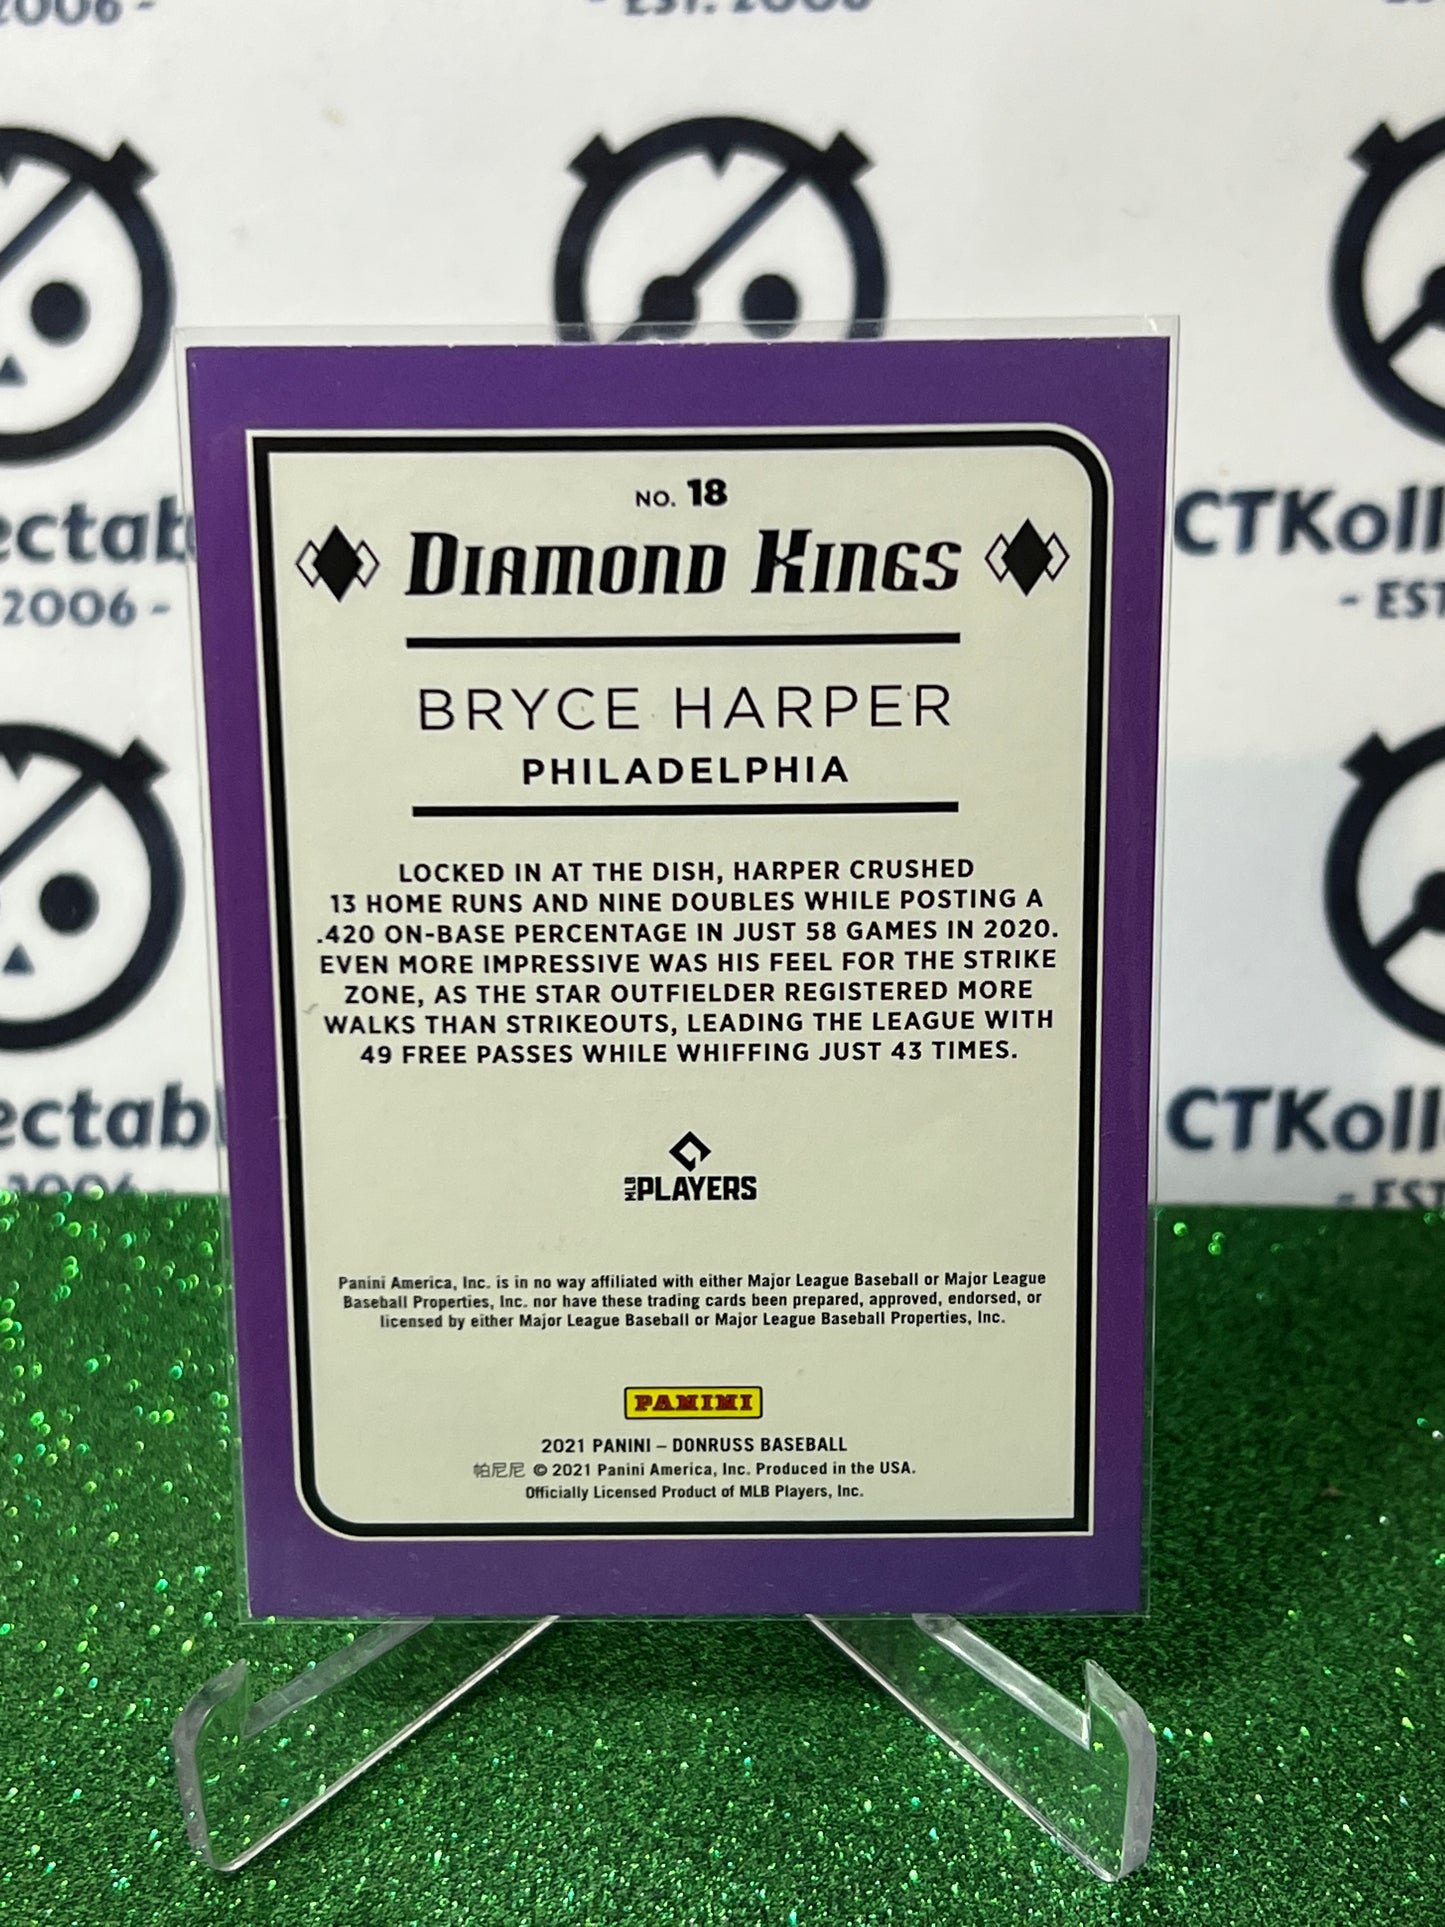 2021 PANINI DIAMOND KINGS BRYCE HARPER # 18 PHILADELPHIA PHILLIES BASEBALL CARD